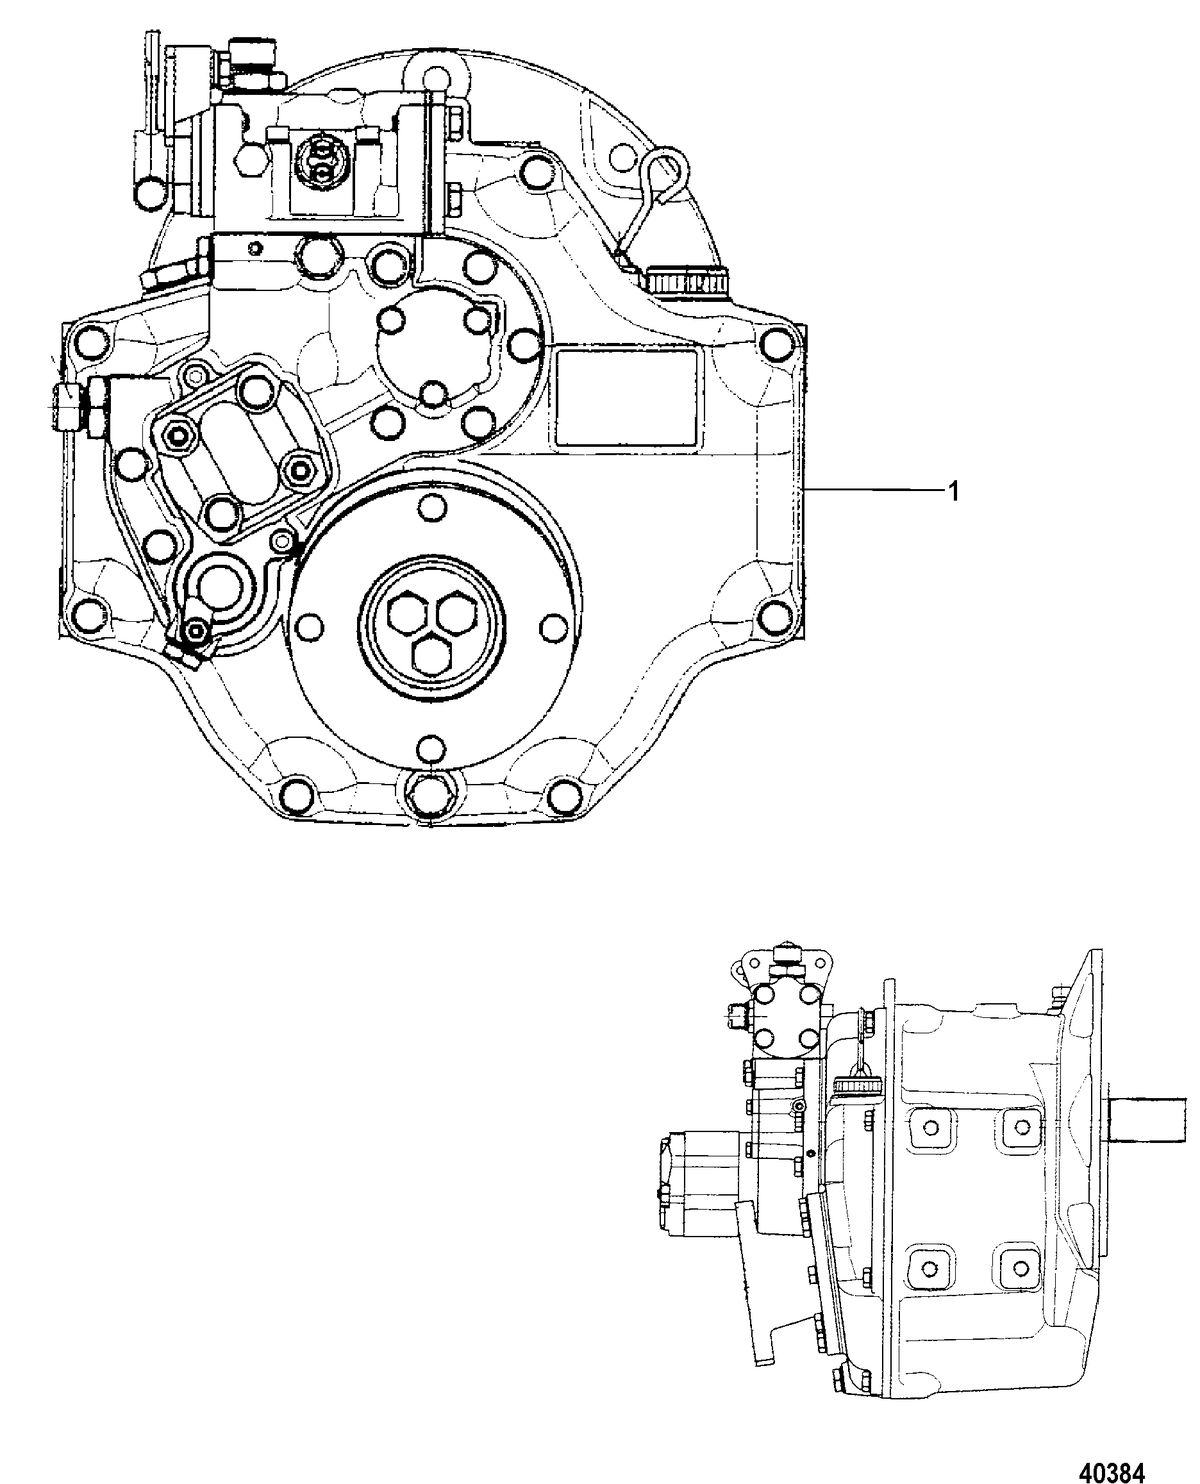 MERCRUISER CUMMINS/MERCRUISER DIESEL QSD-2.8L Transmission and Related Parts (Inboard), Technodrive 485